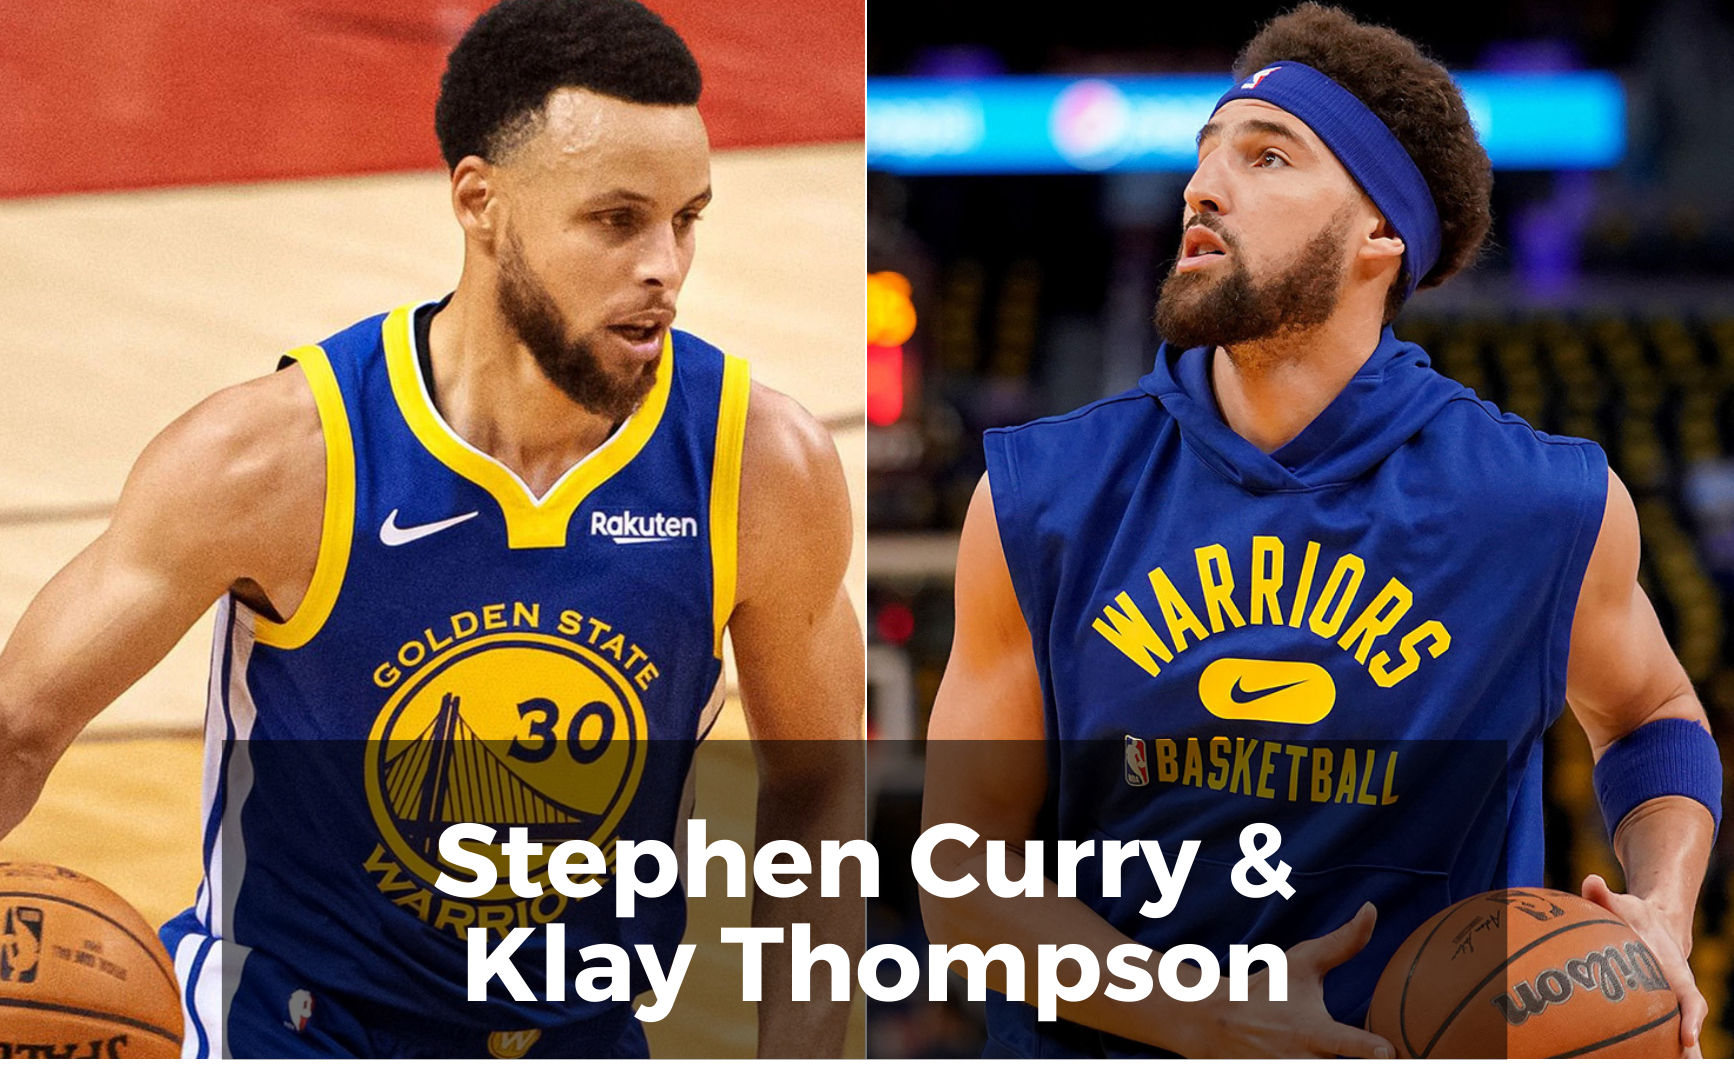 Stephen Curry & Klay Thompson